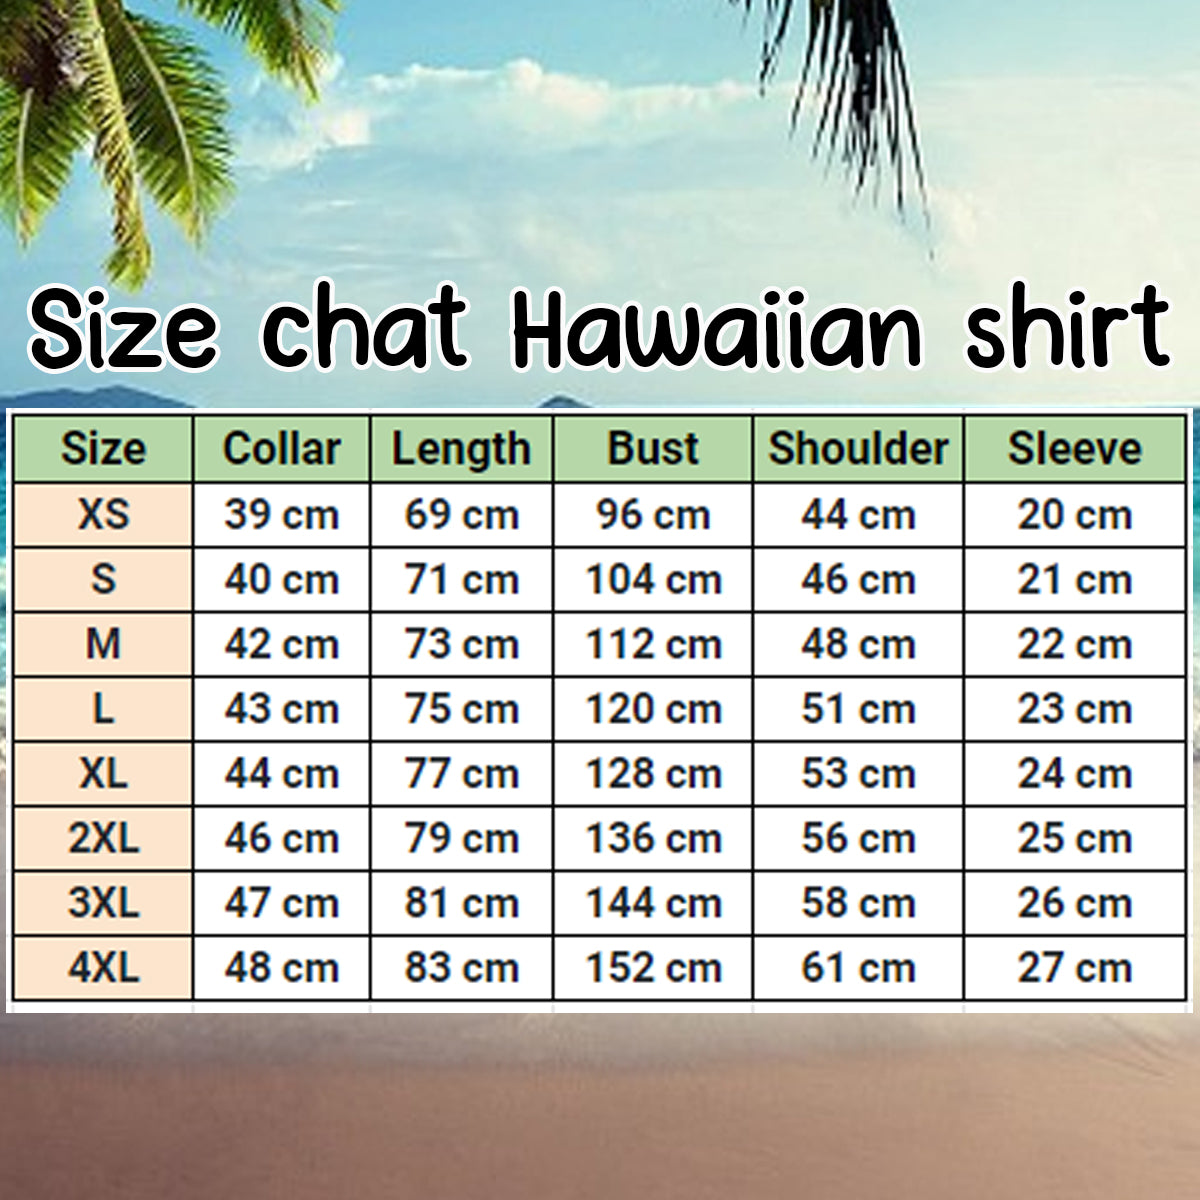 Hostein Pattern Hawaiian Shirt/ Cow Aloha Shirts/ Gift for cow lovers